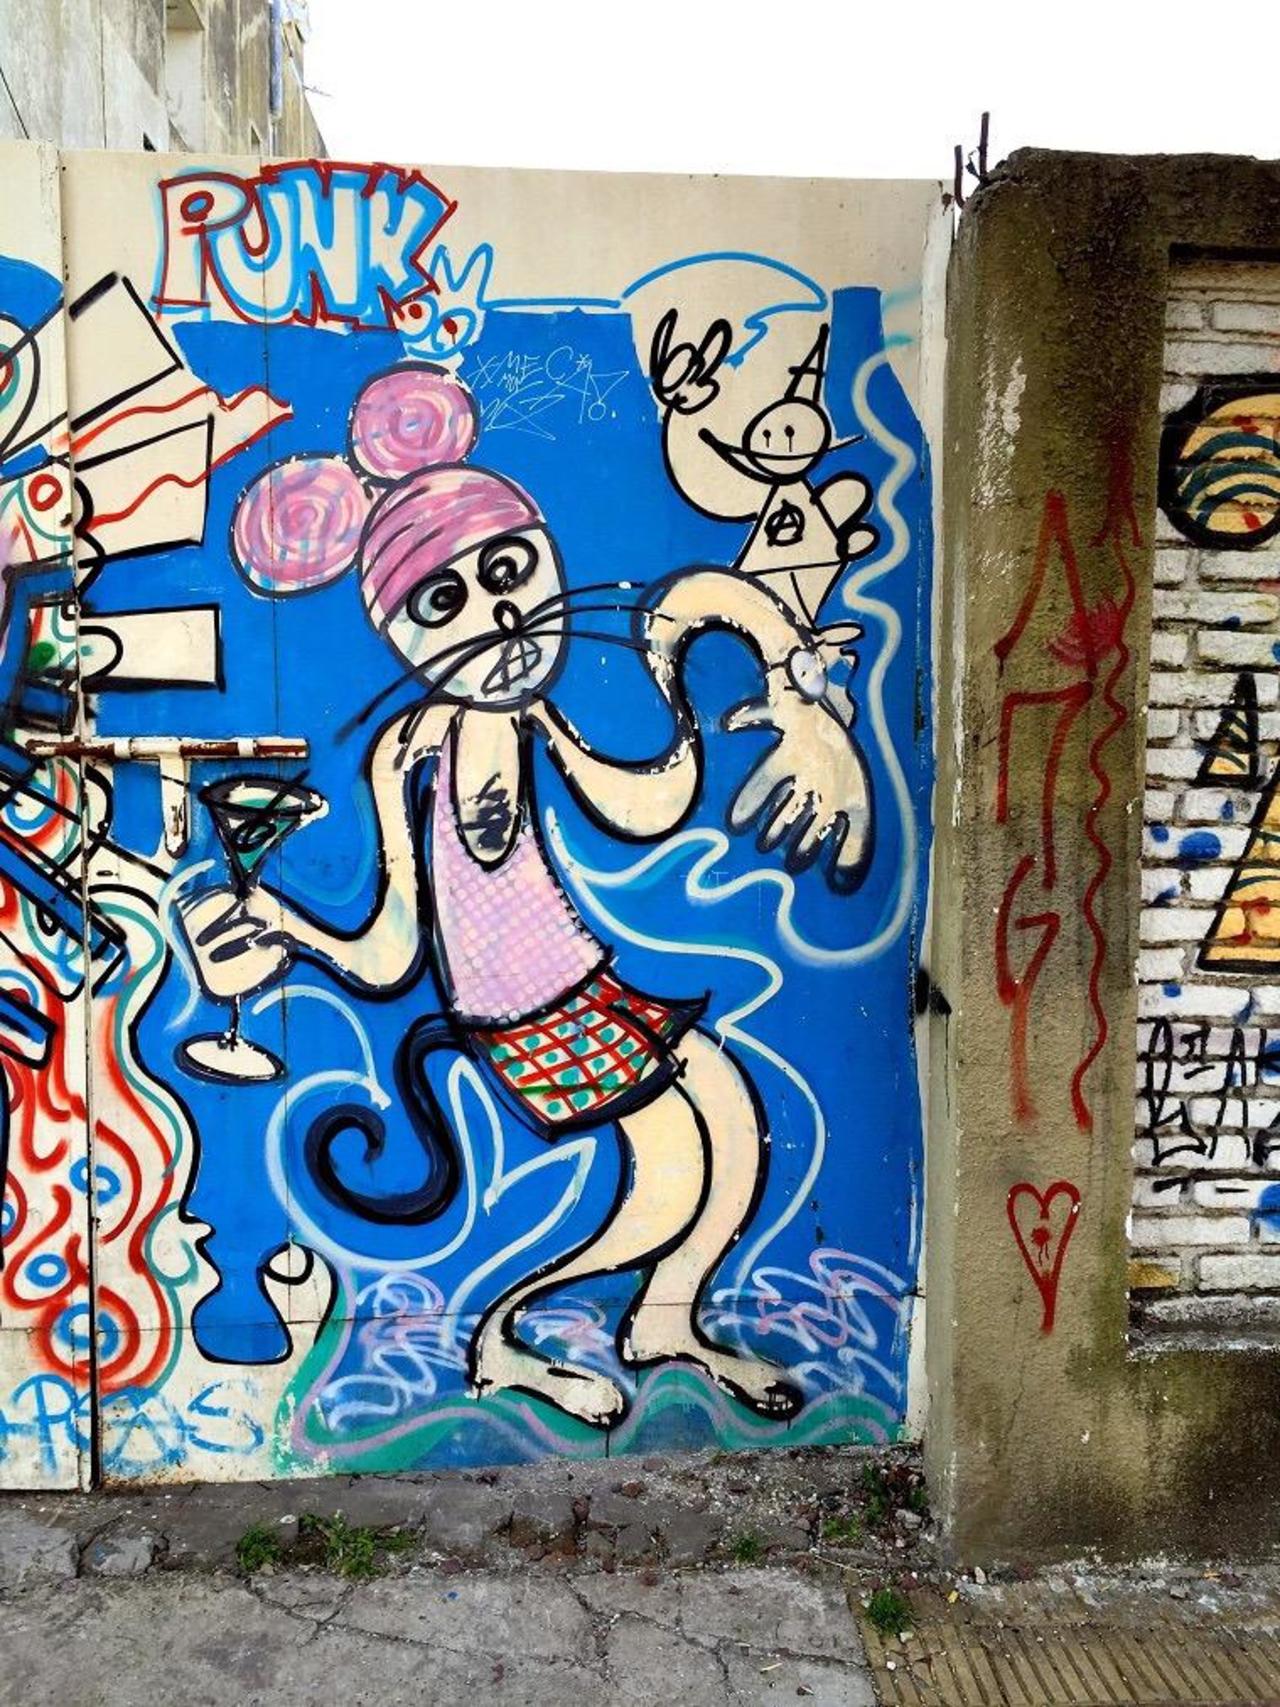 #Graffiti de hoy: << Dancing queen >> calle 66, 8y9 #LaPlata #Argentina #StreetArt #UrbanArt #ArteUrbano http://t.co/cCmkzz9vBC